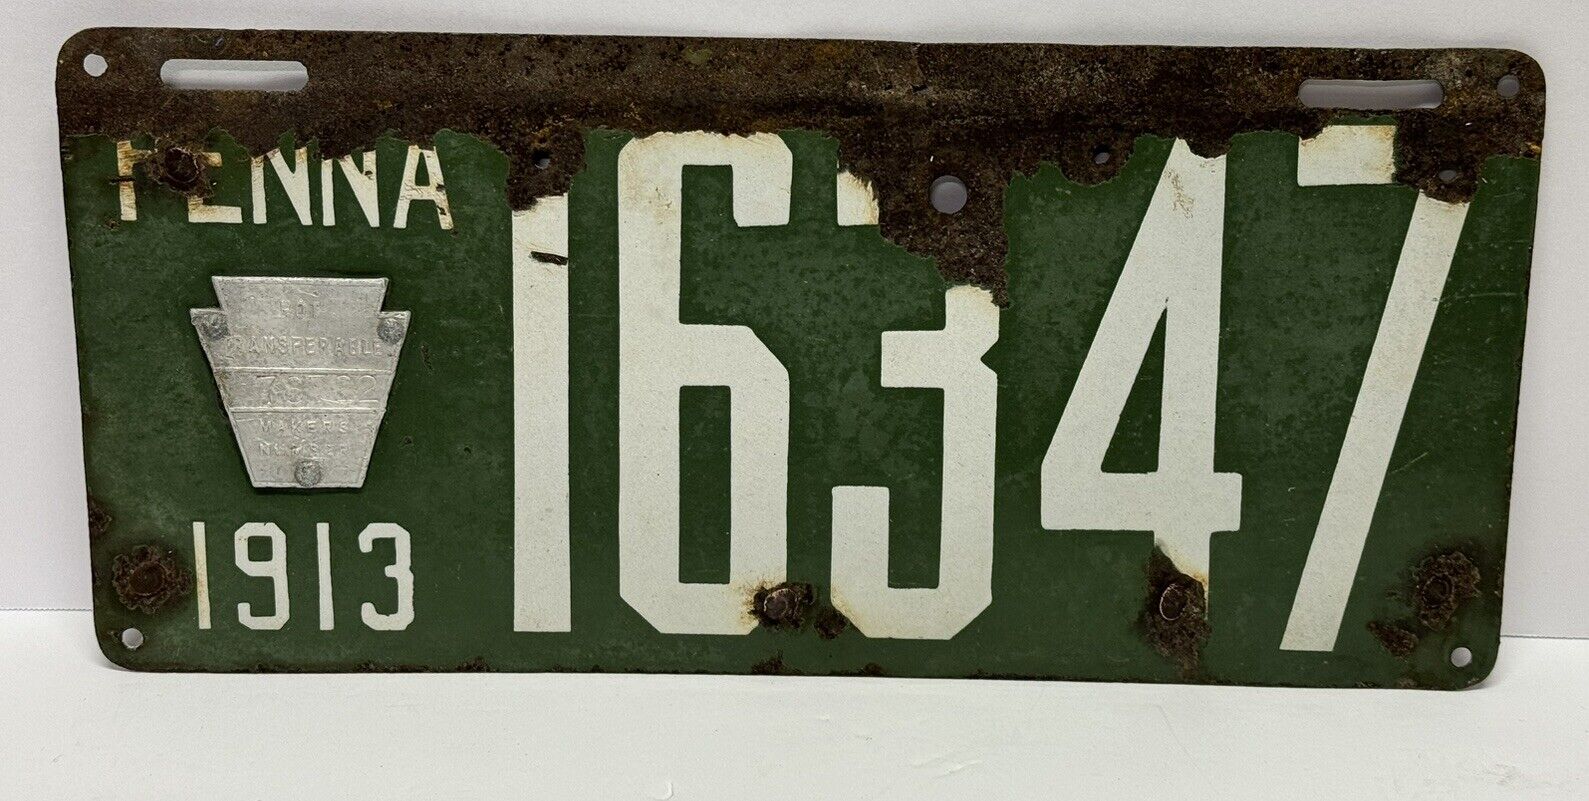 1913 Pennsylvania Porcelain License Plate 16347 Penna License Plates Auto Tag